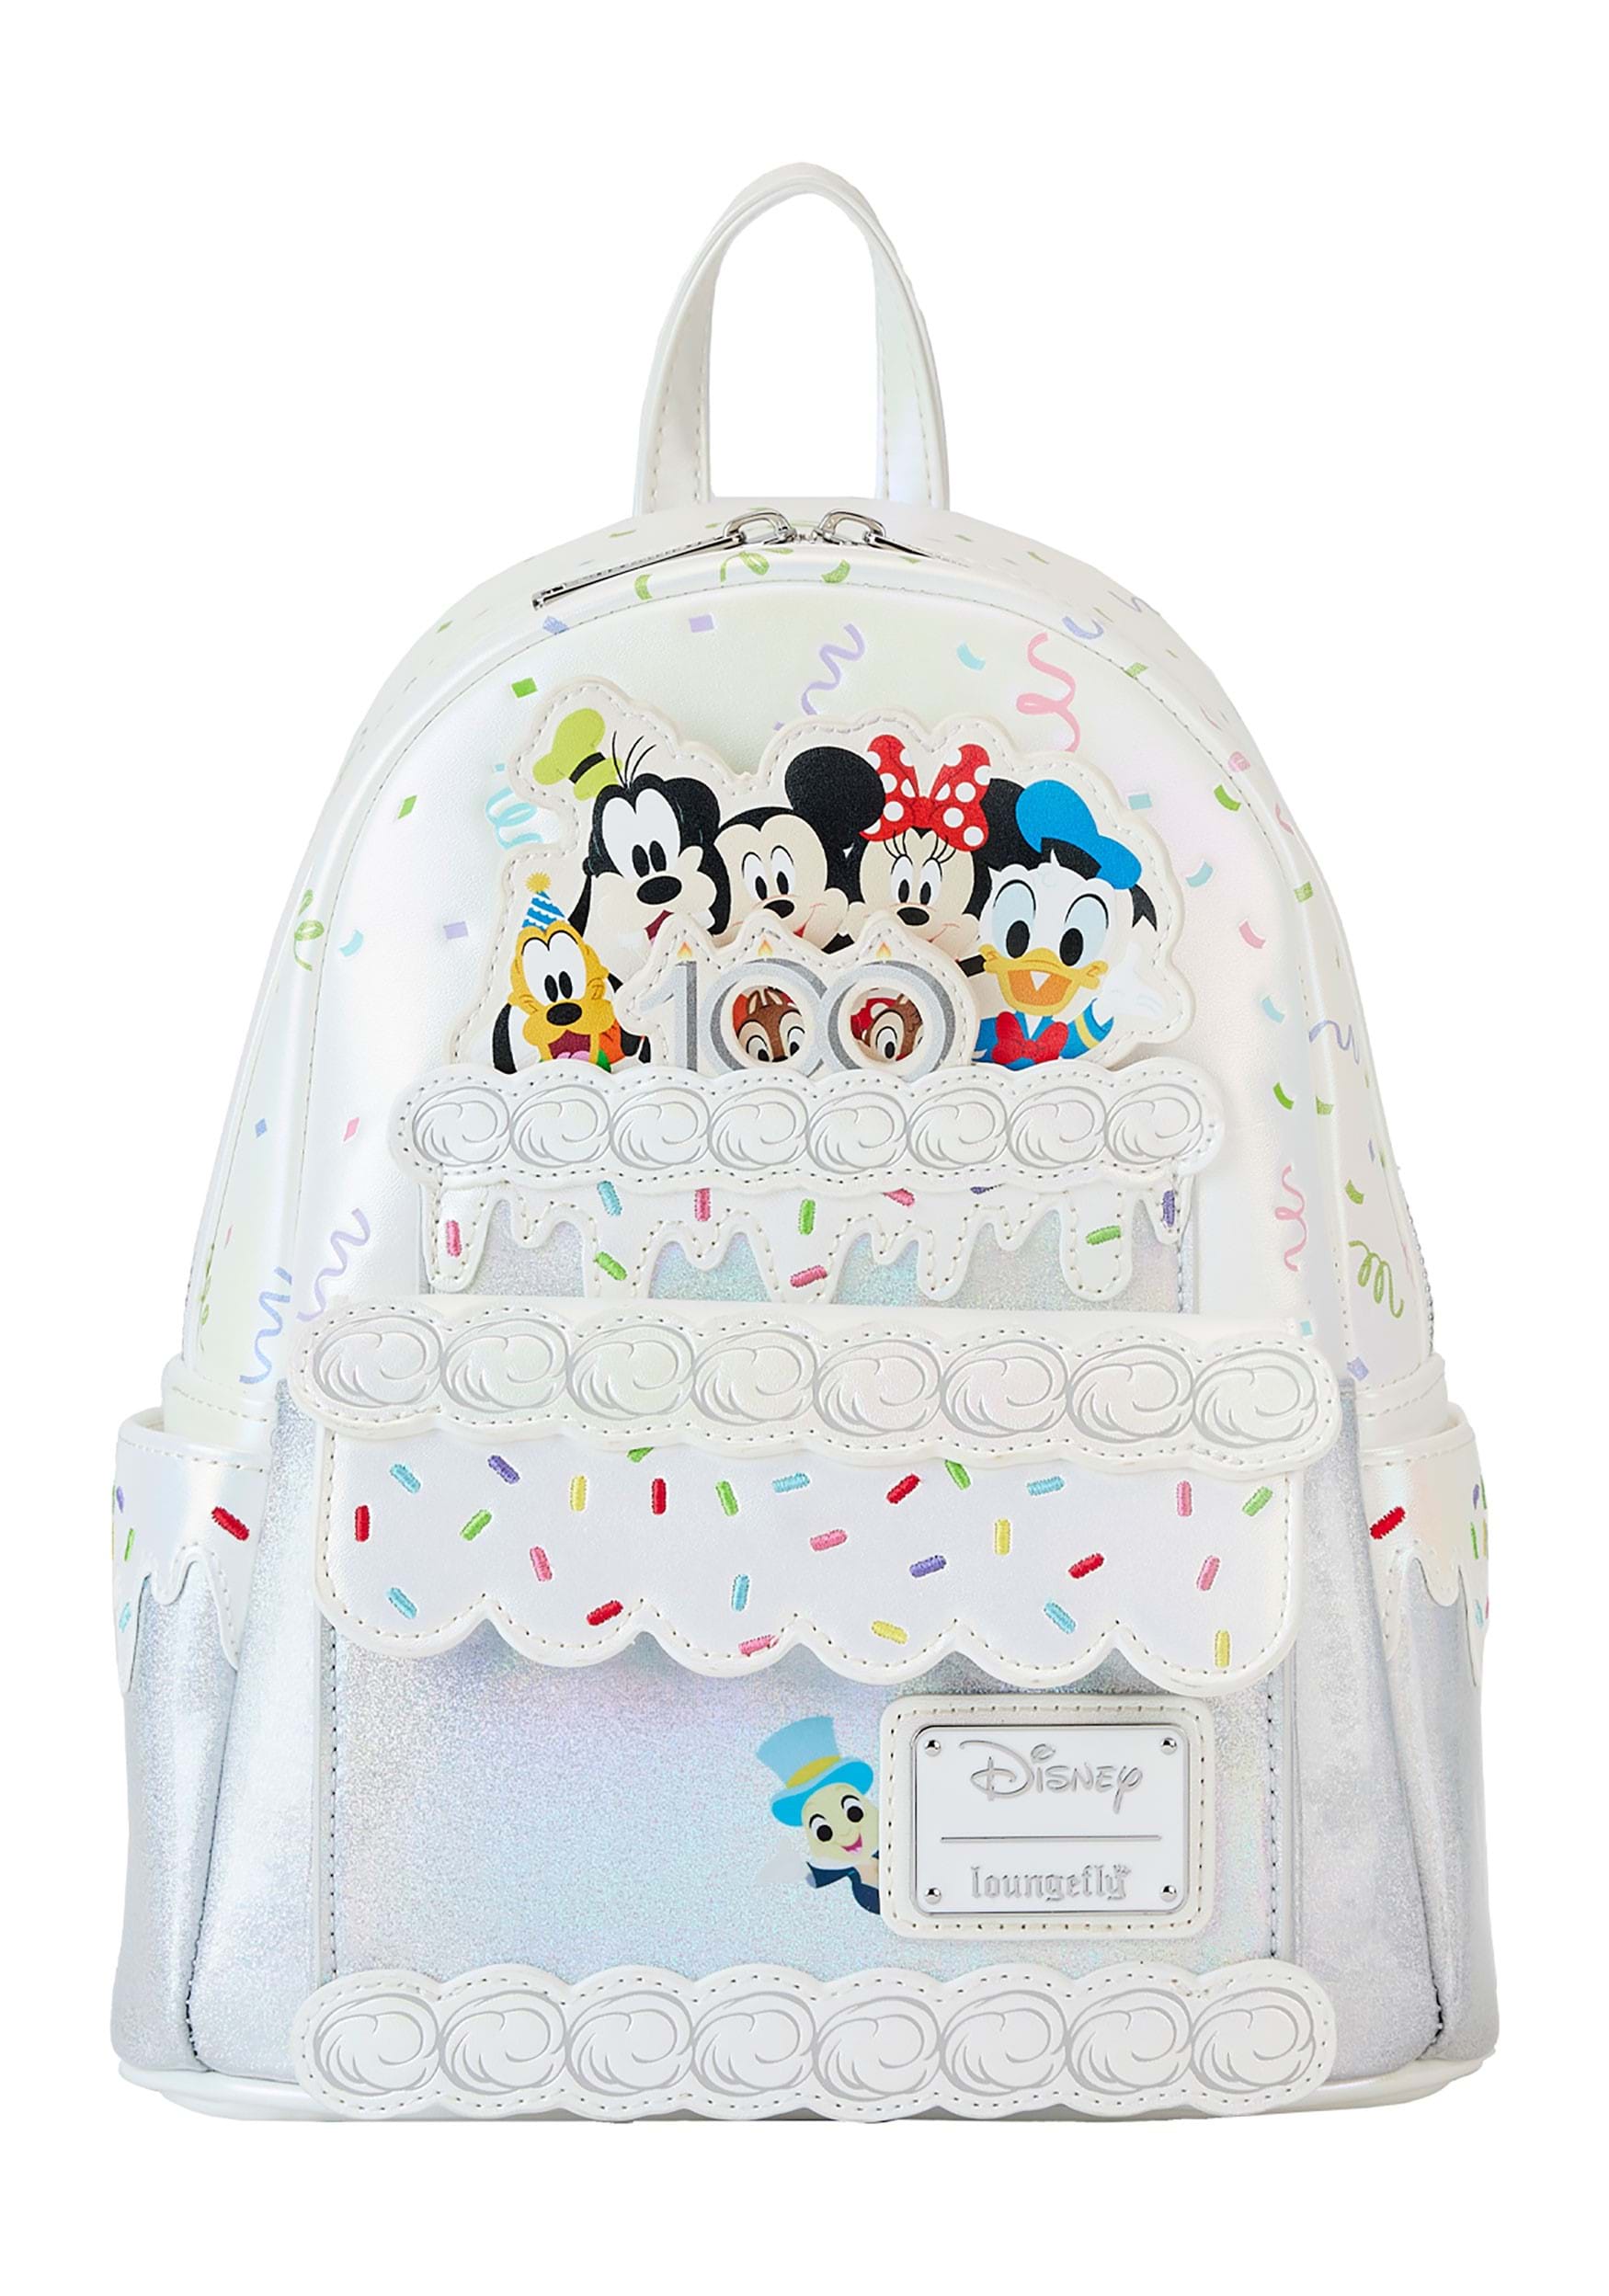 Disney 100 Celebration Cake Mini Backpack by Loungefly | Disney Backpacks